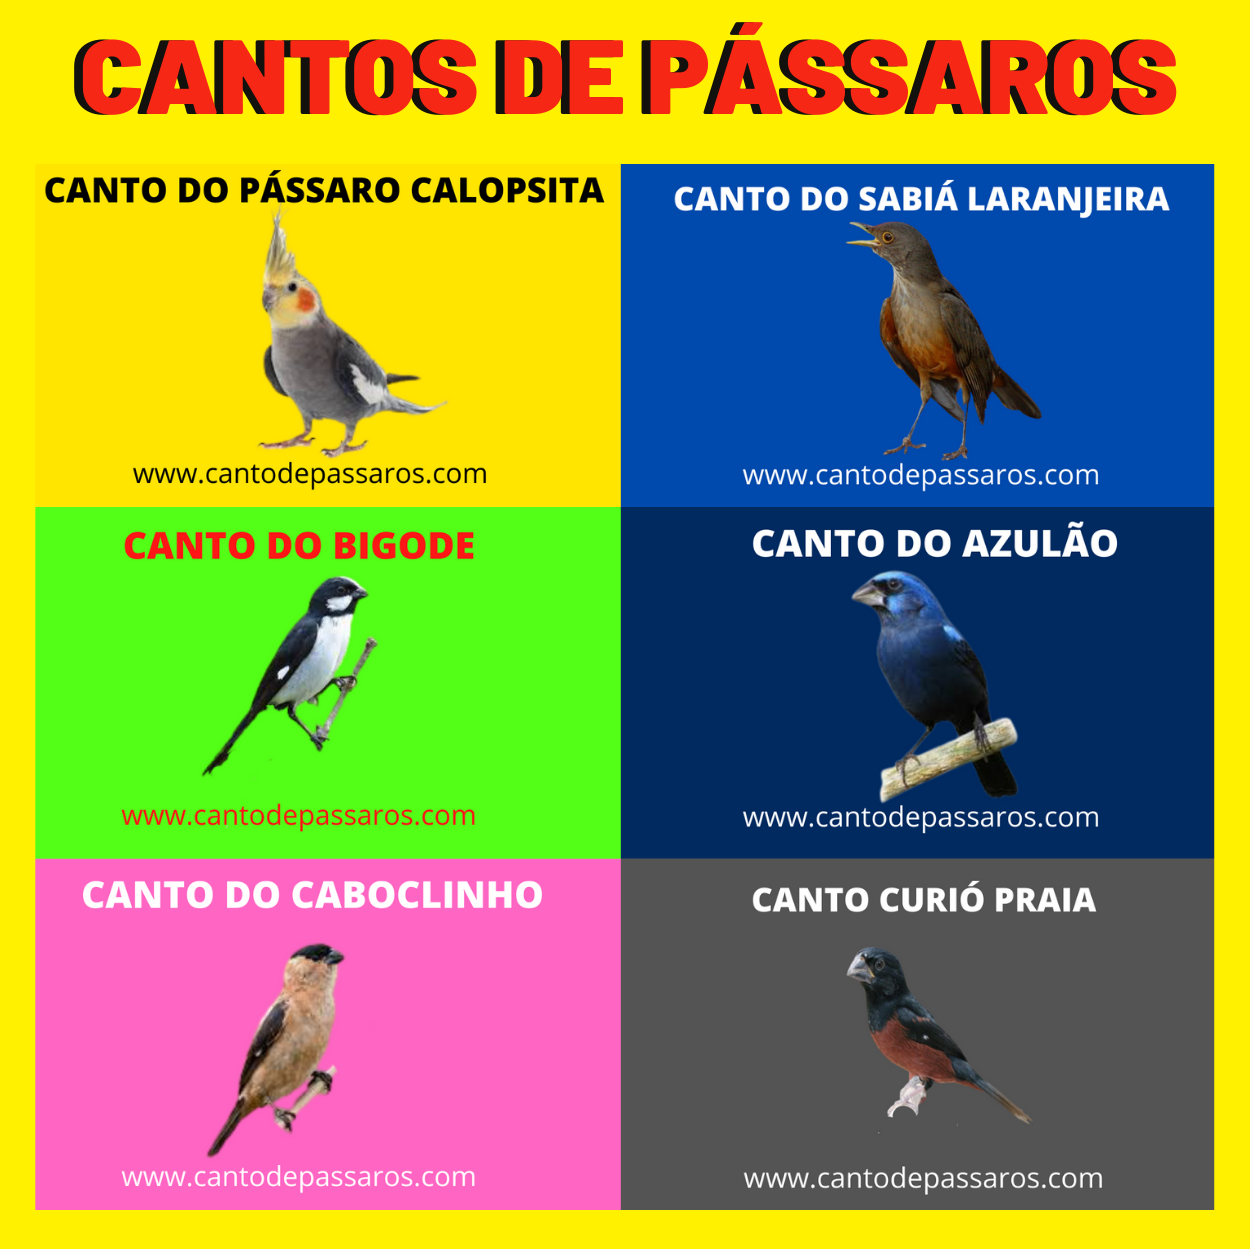 CANTOS DE PASSAROS